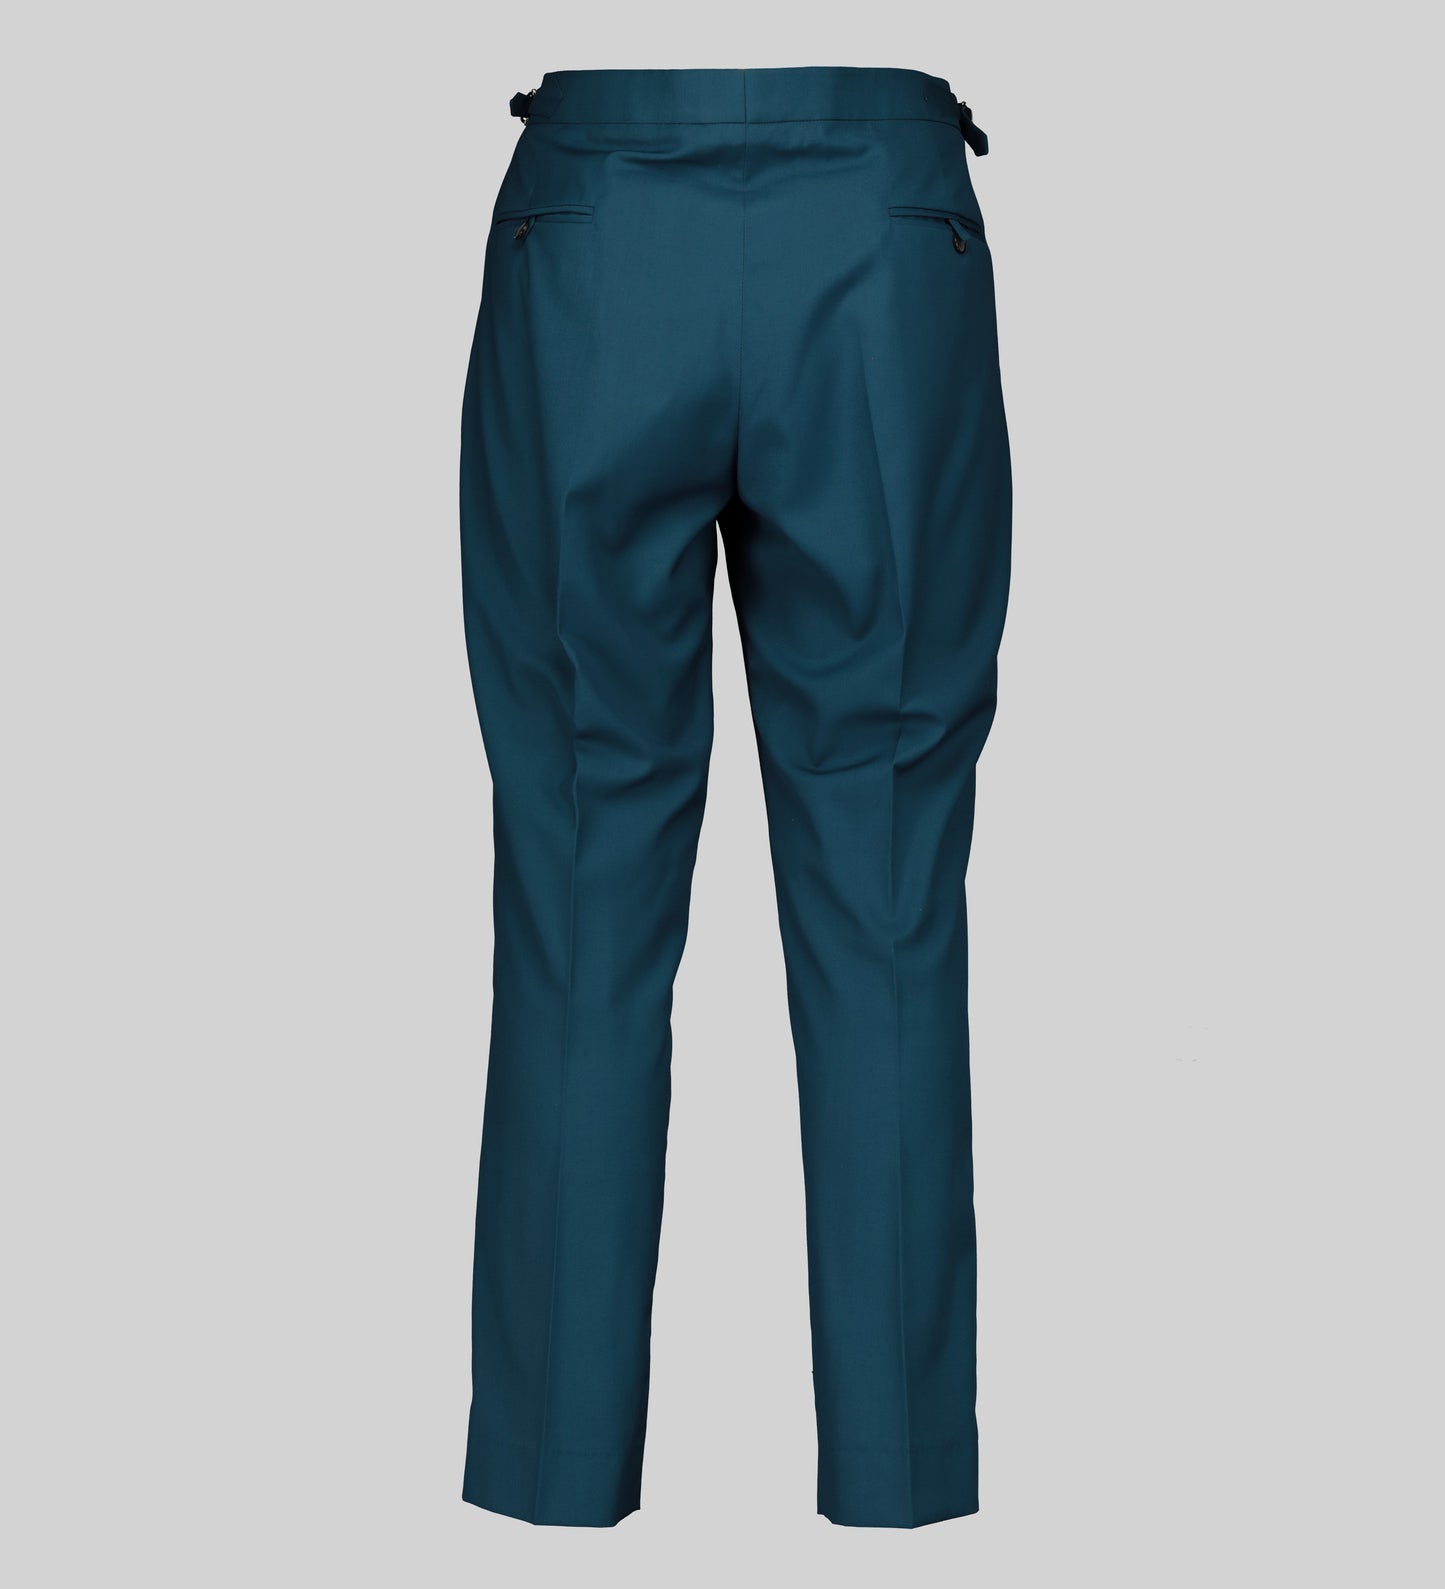 Safari Suit Ensemble Pants Set with Pocket Square